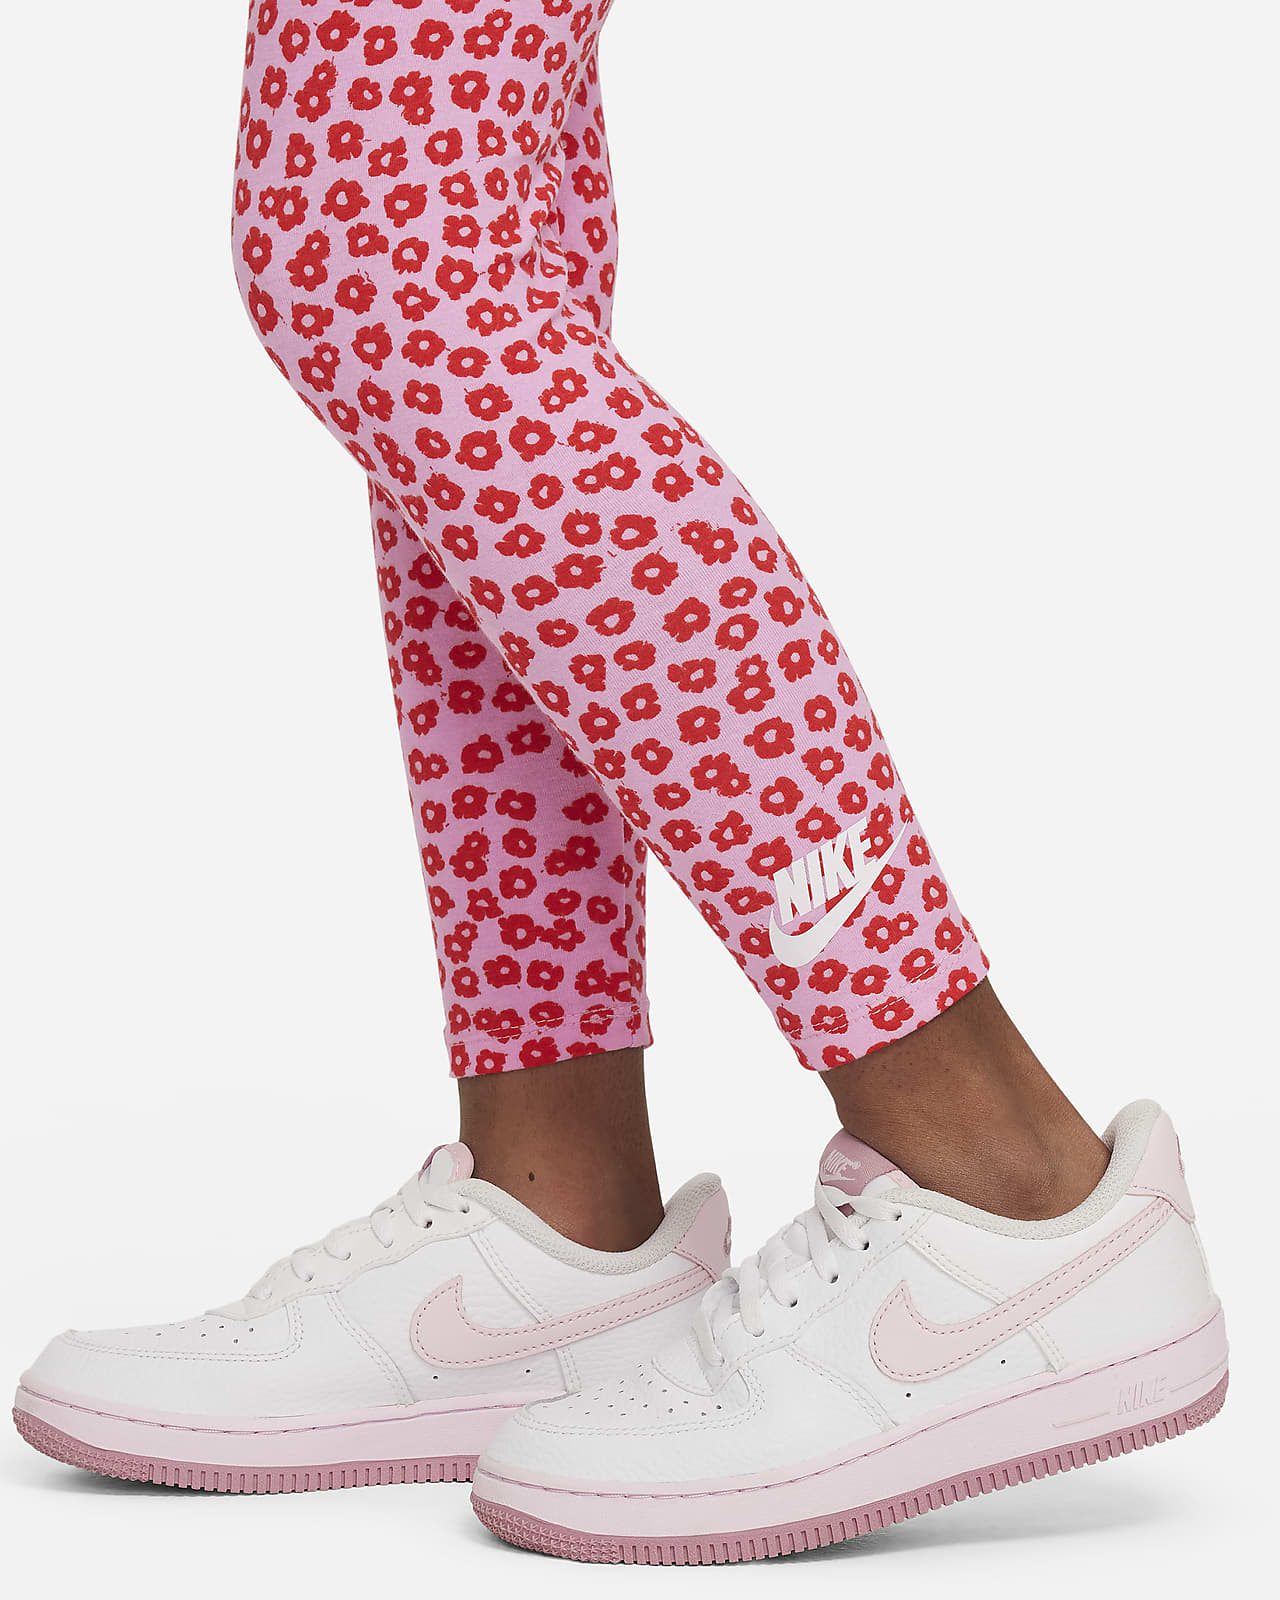 Nike - Ensemble legging rose fille